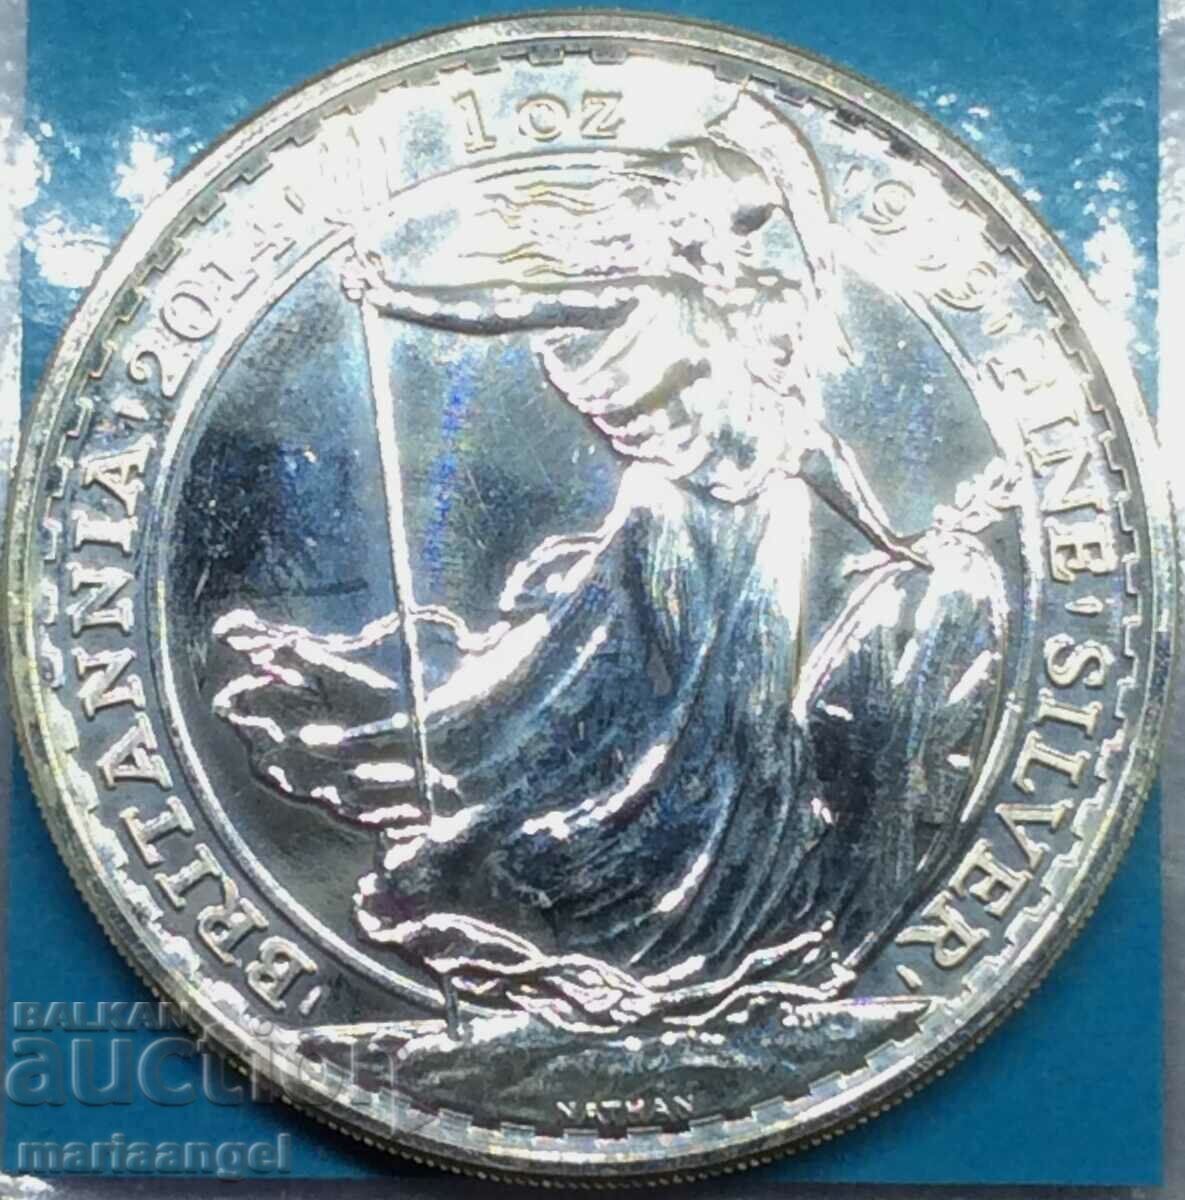 Great Britain 2 Pounds 2014 1 Oz "Britain" UNC Silver